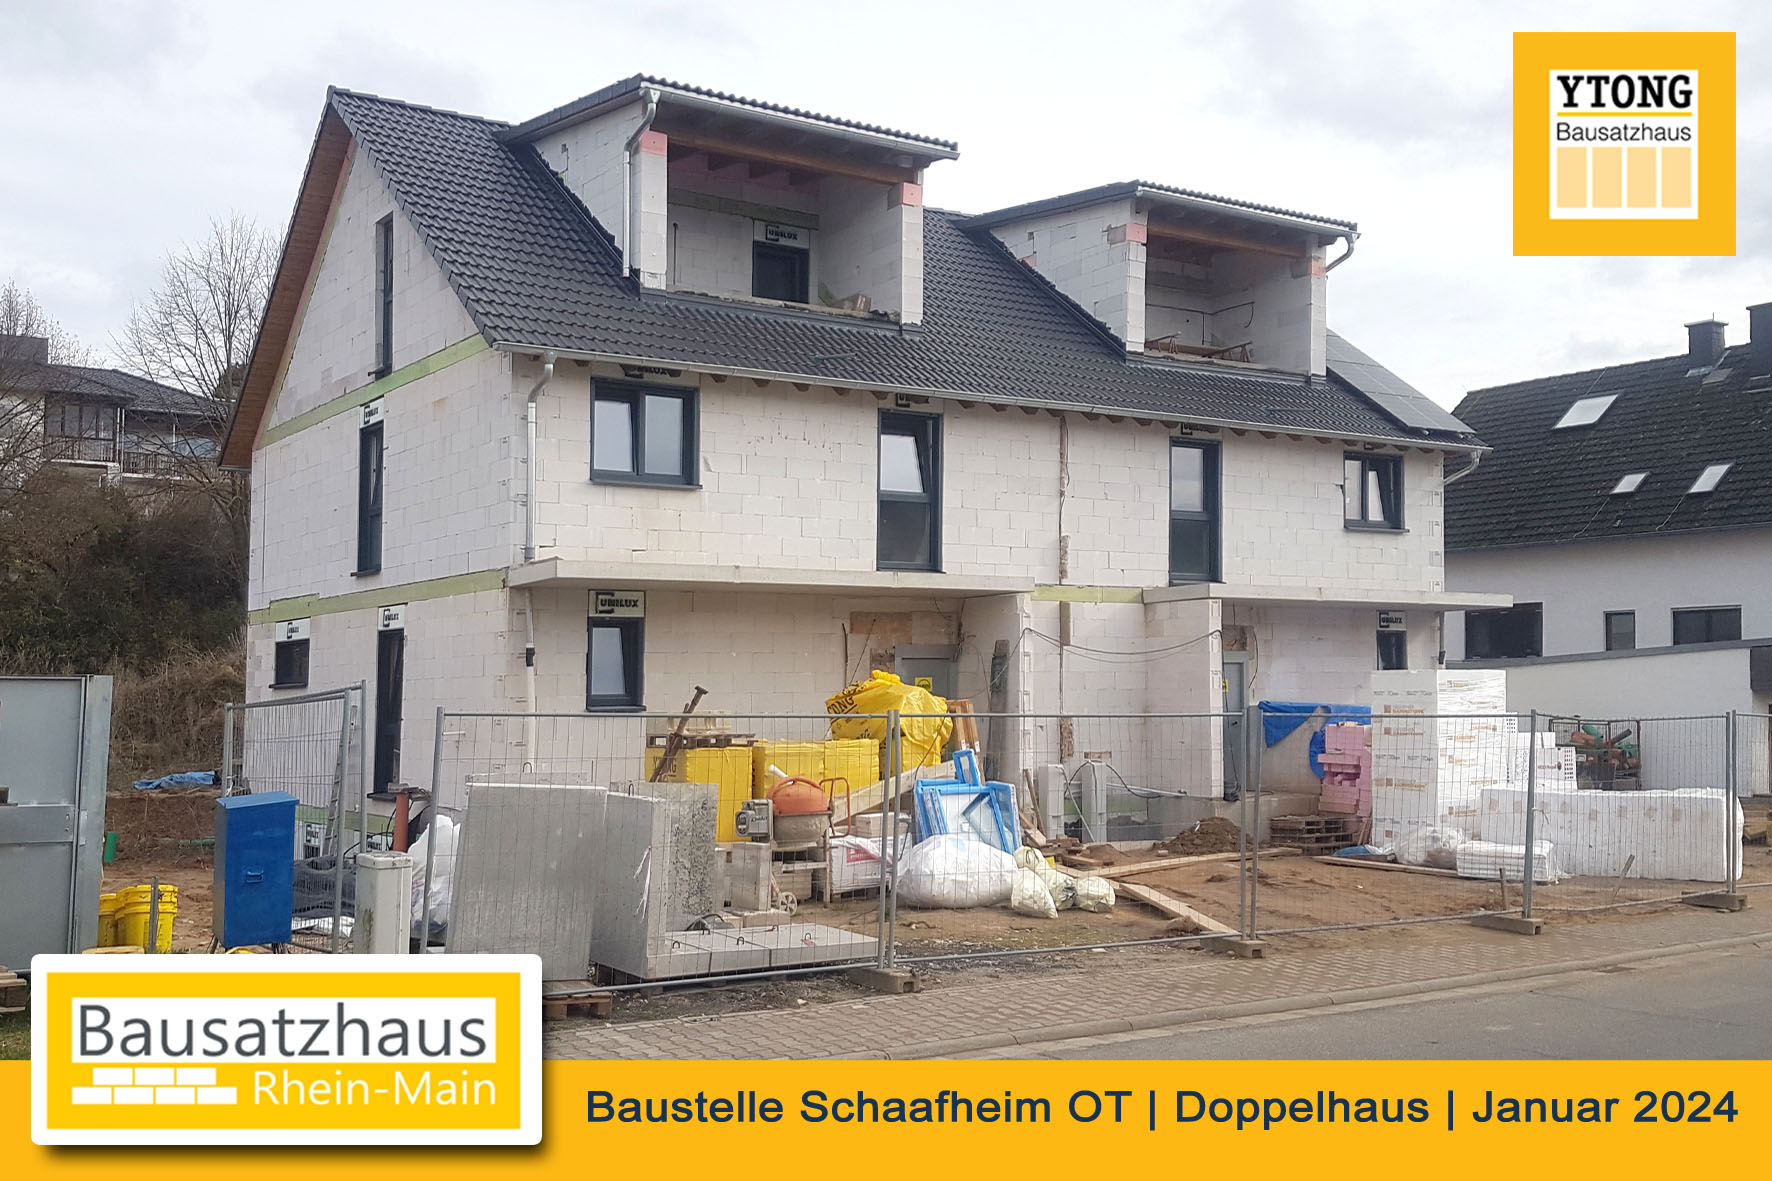 Marcus Kurz Bausatzhaus Rhein-Main, Ytong Bausatzhaus, Selbstbau, Gross-Umstadt, Messel, YTONG